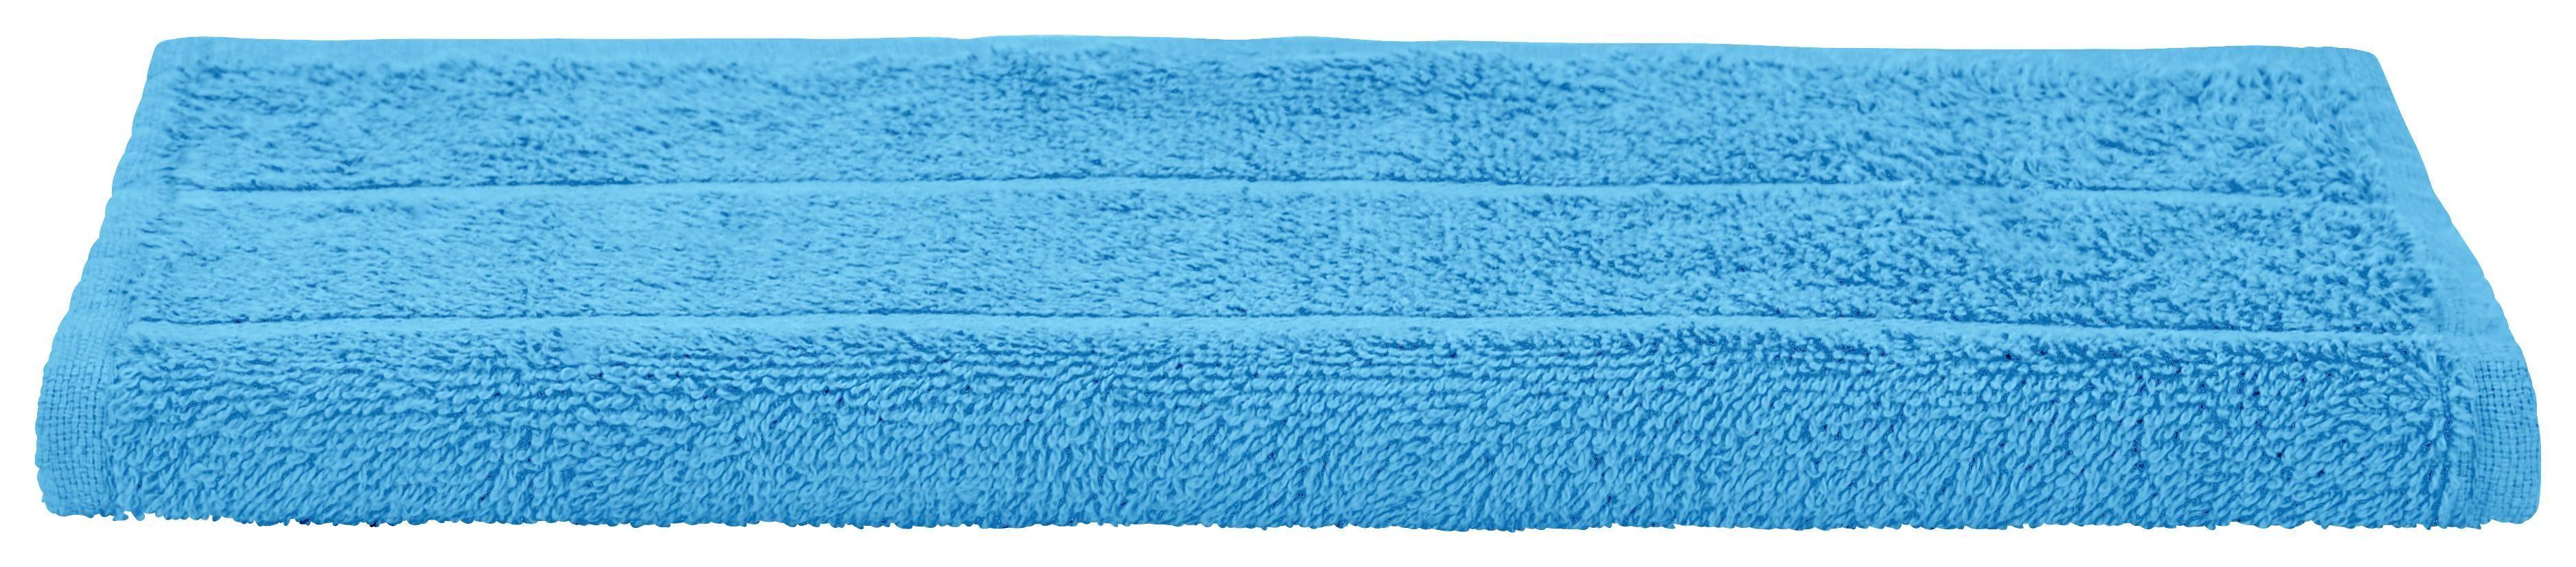 Gästehandtuch Liliane ca. 30/50cm Azurblau - Blau, KONVENTIONELL, Textil (30/50cm) - Ondega